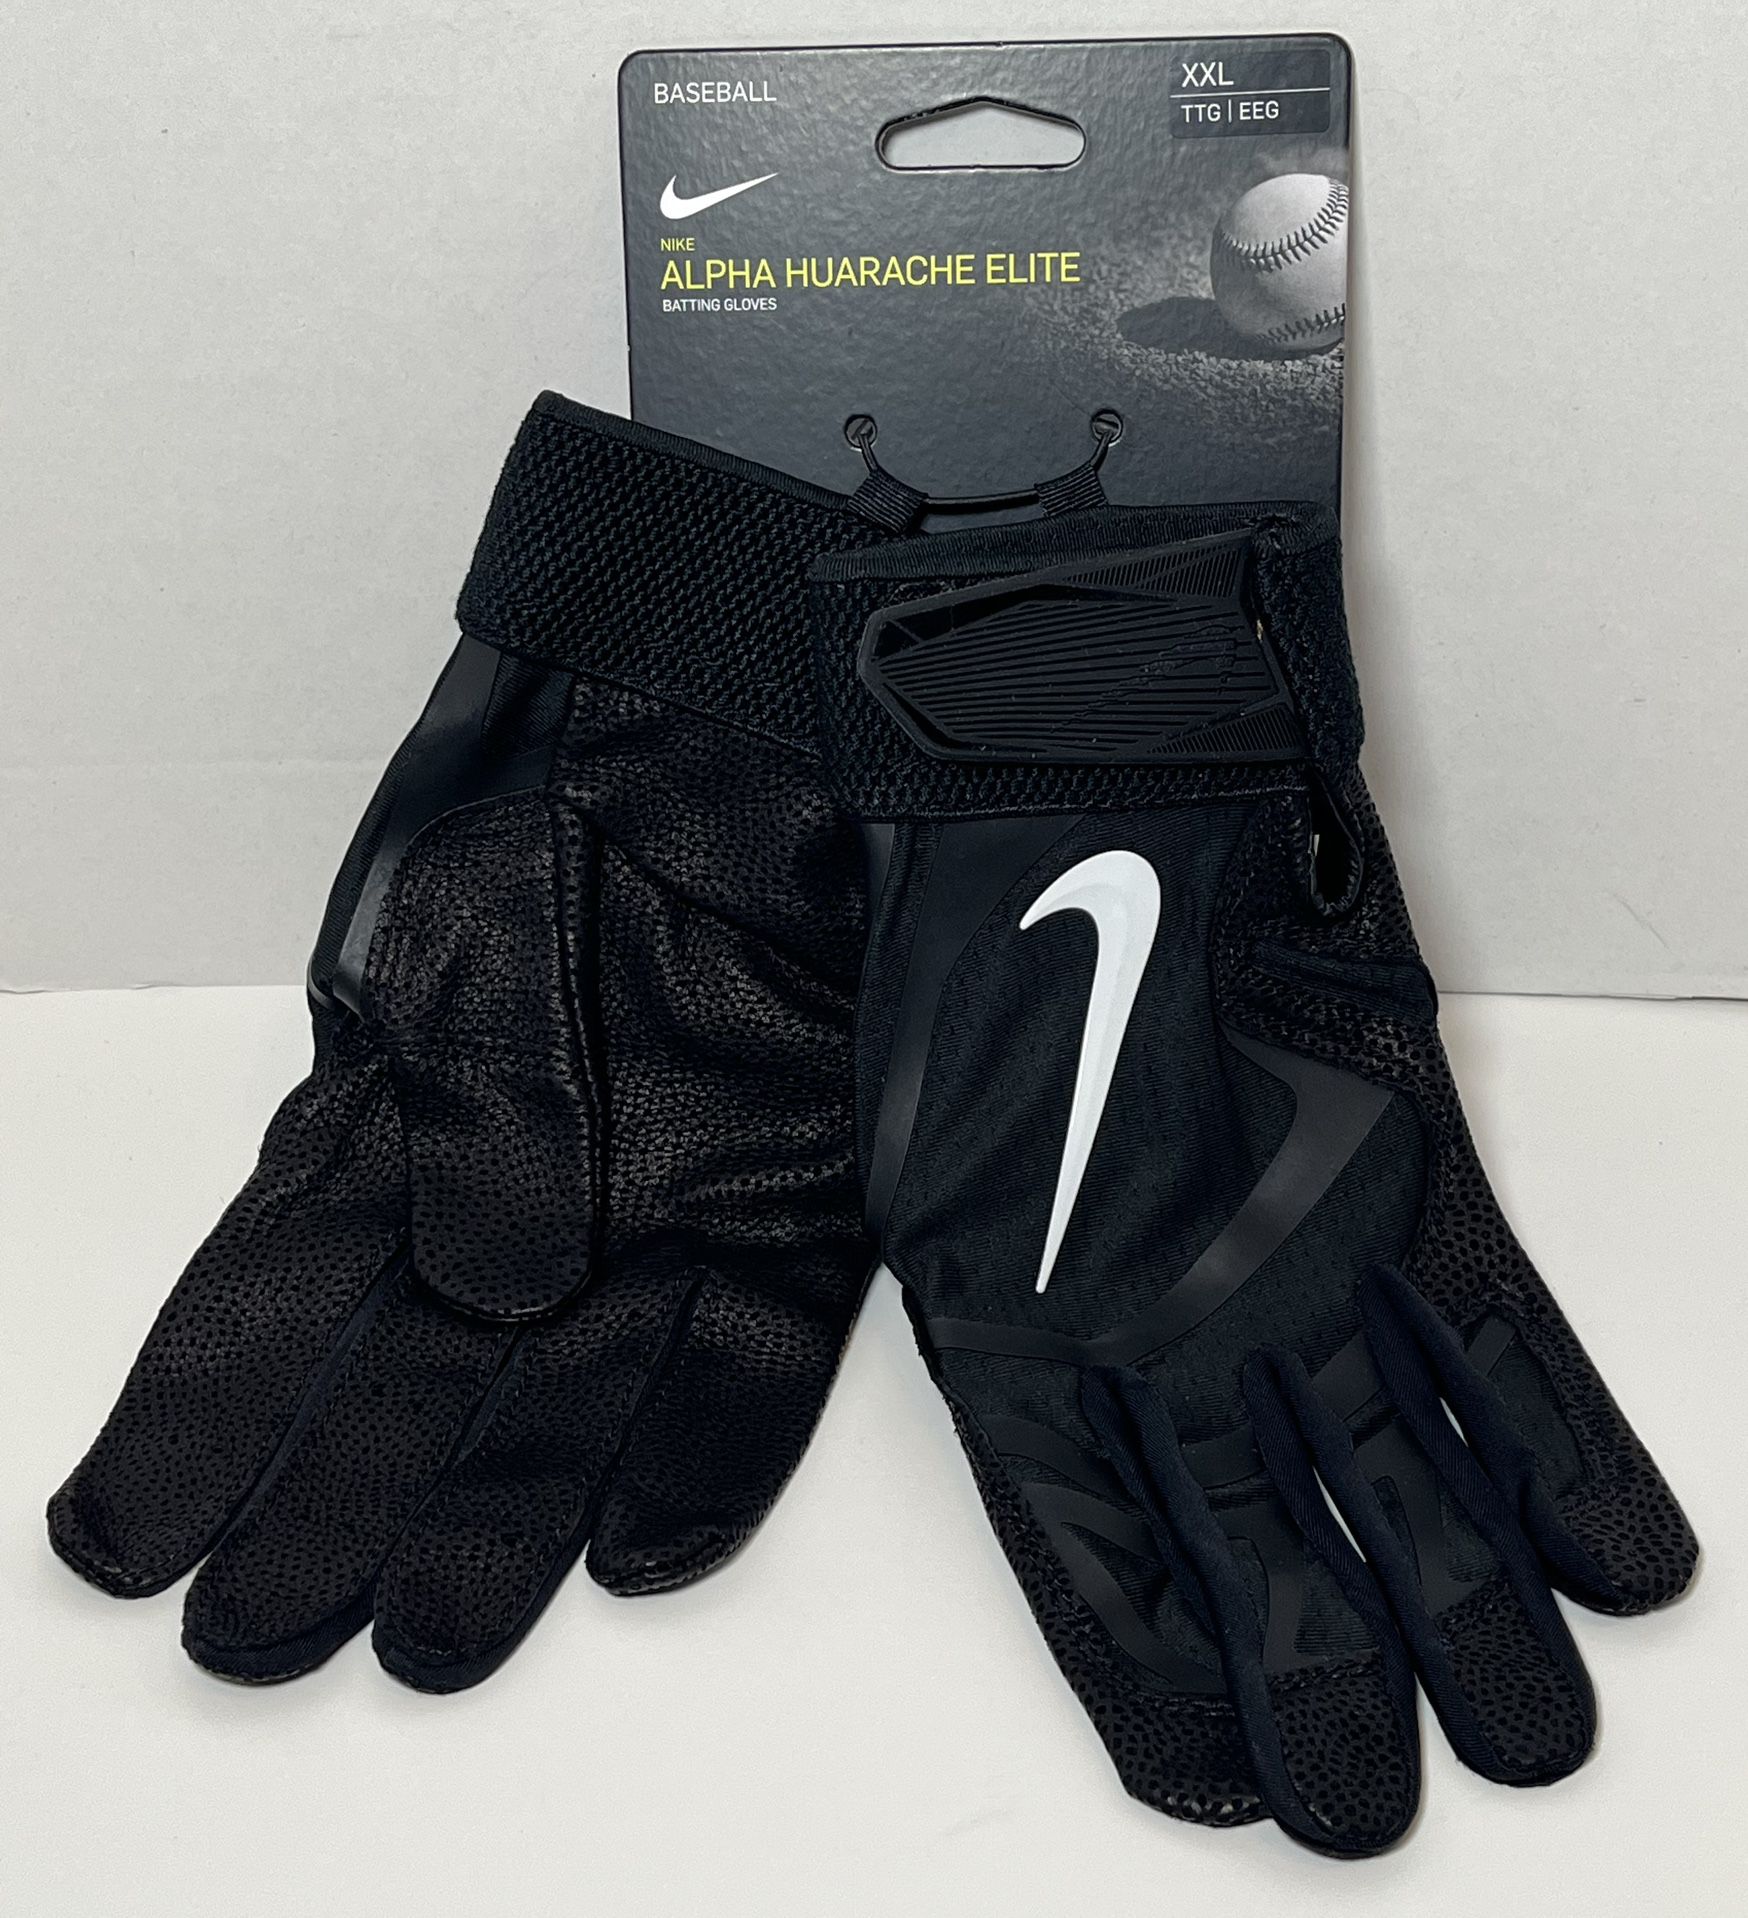 Nike Alpha Huarache Elite Batting Baseball Gloves Black Mens Size 2XL CV0720 091